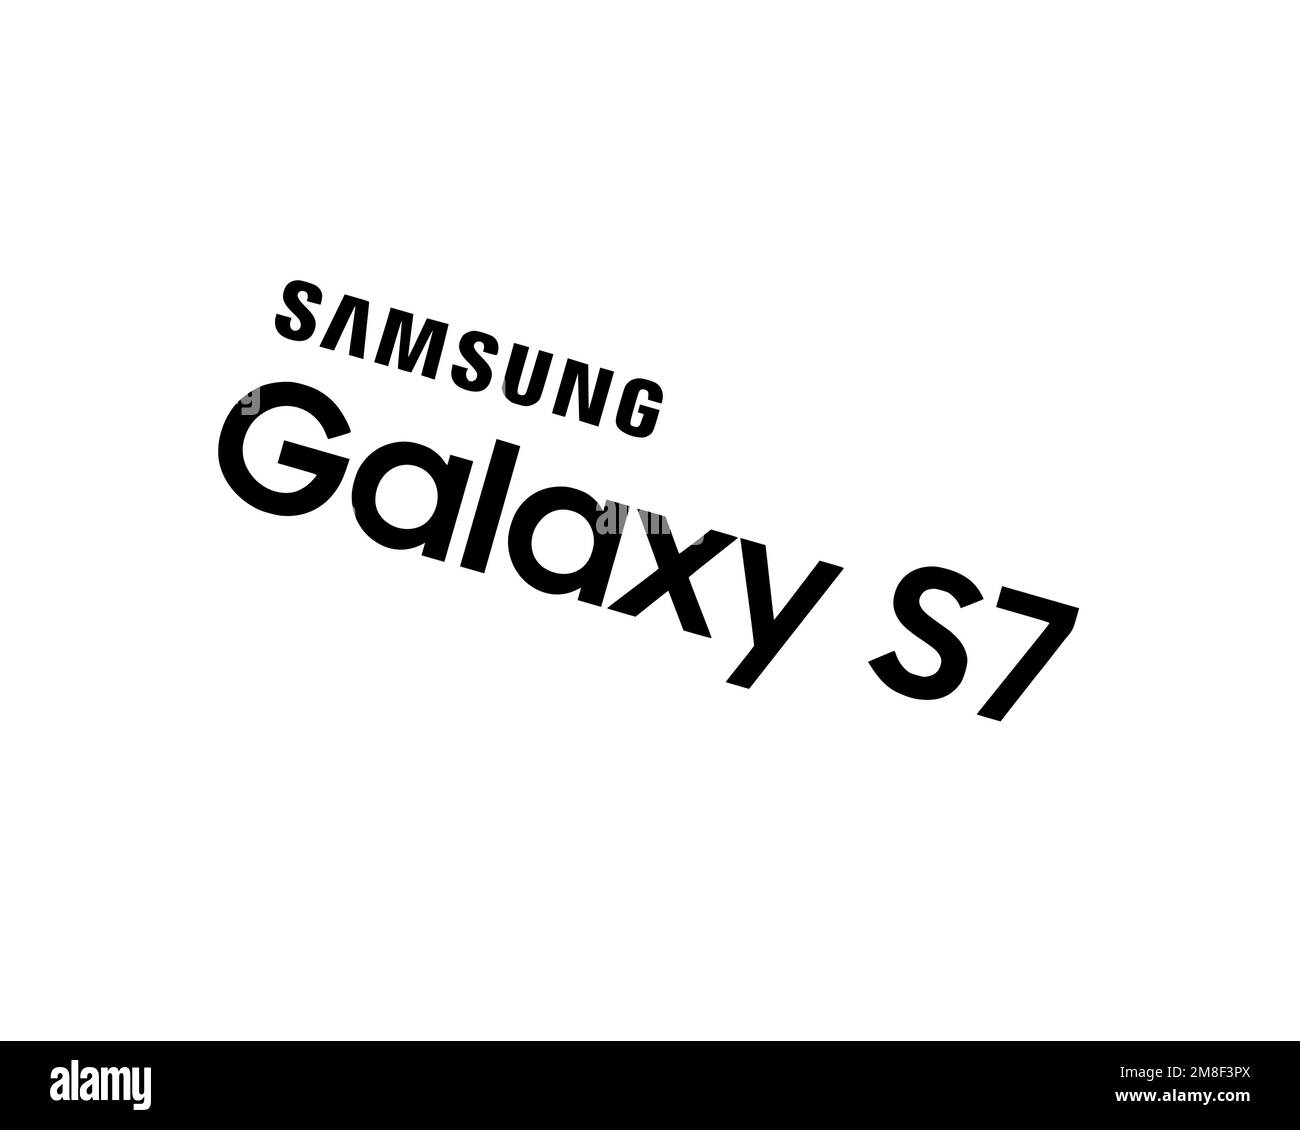 Samsung Galaxy S7, Rotated Logo, White Background B Stock Photo